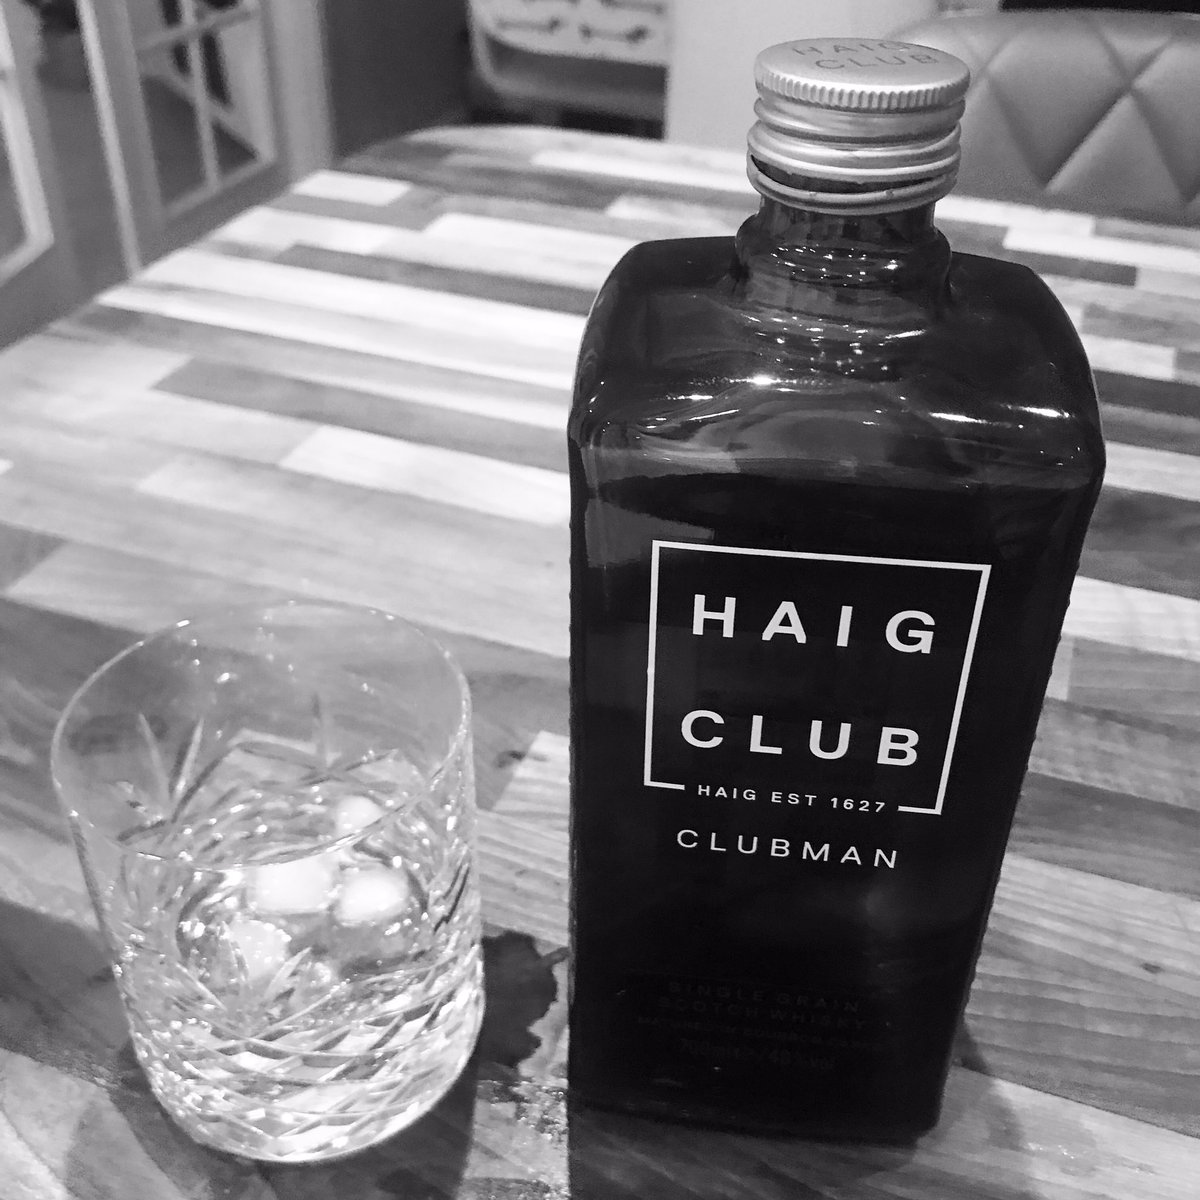 Wee dram tonight! #haigclub #whiskey #fullyrecommended